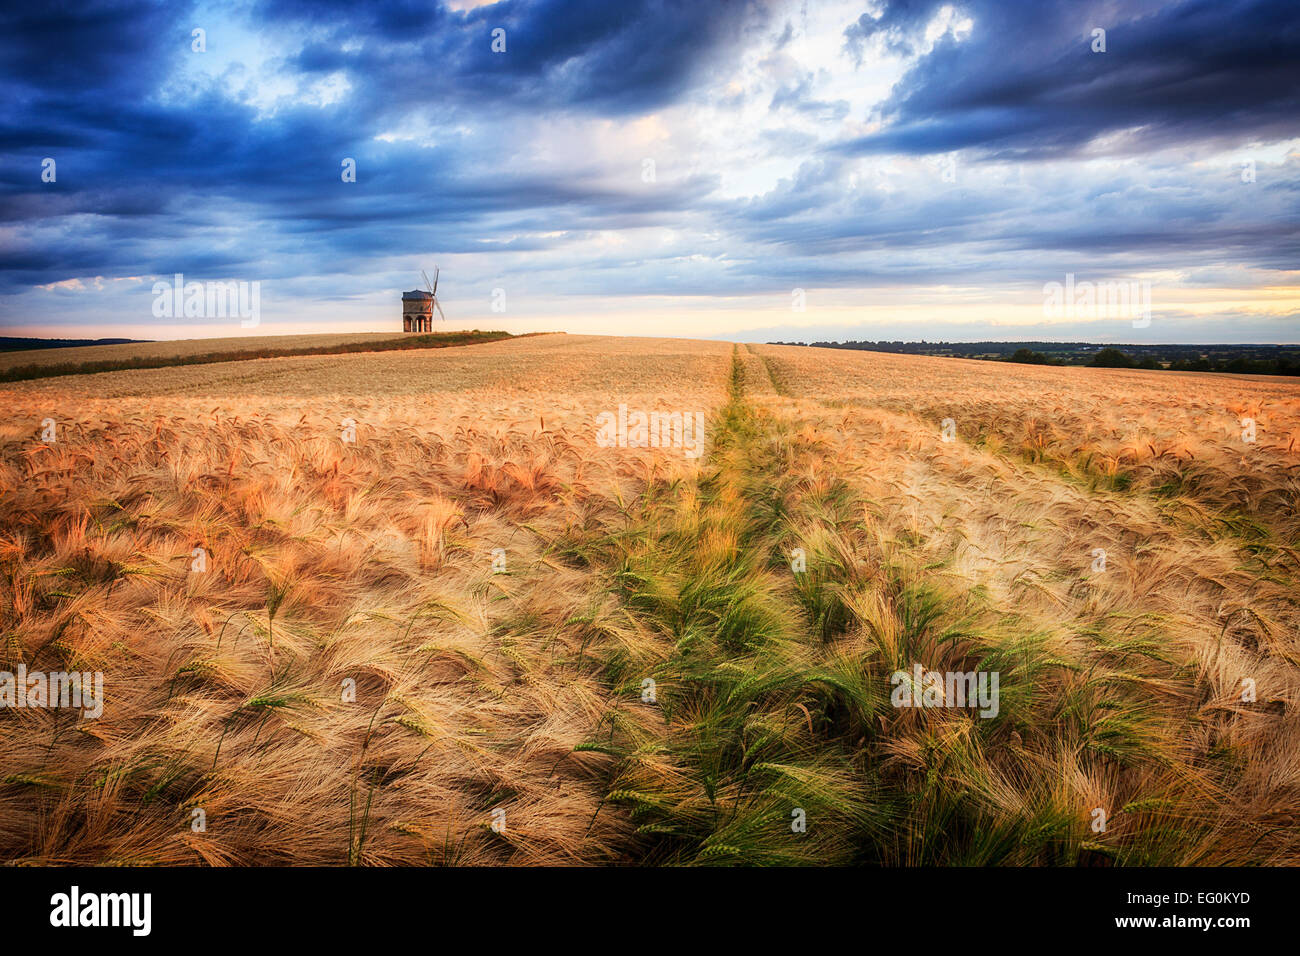 Windmill in a barley field, Chesterton, Warwickshire, England, UK Stock Photo